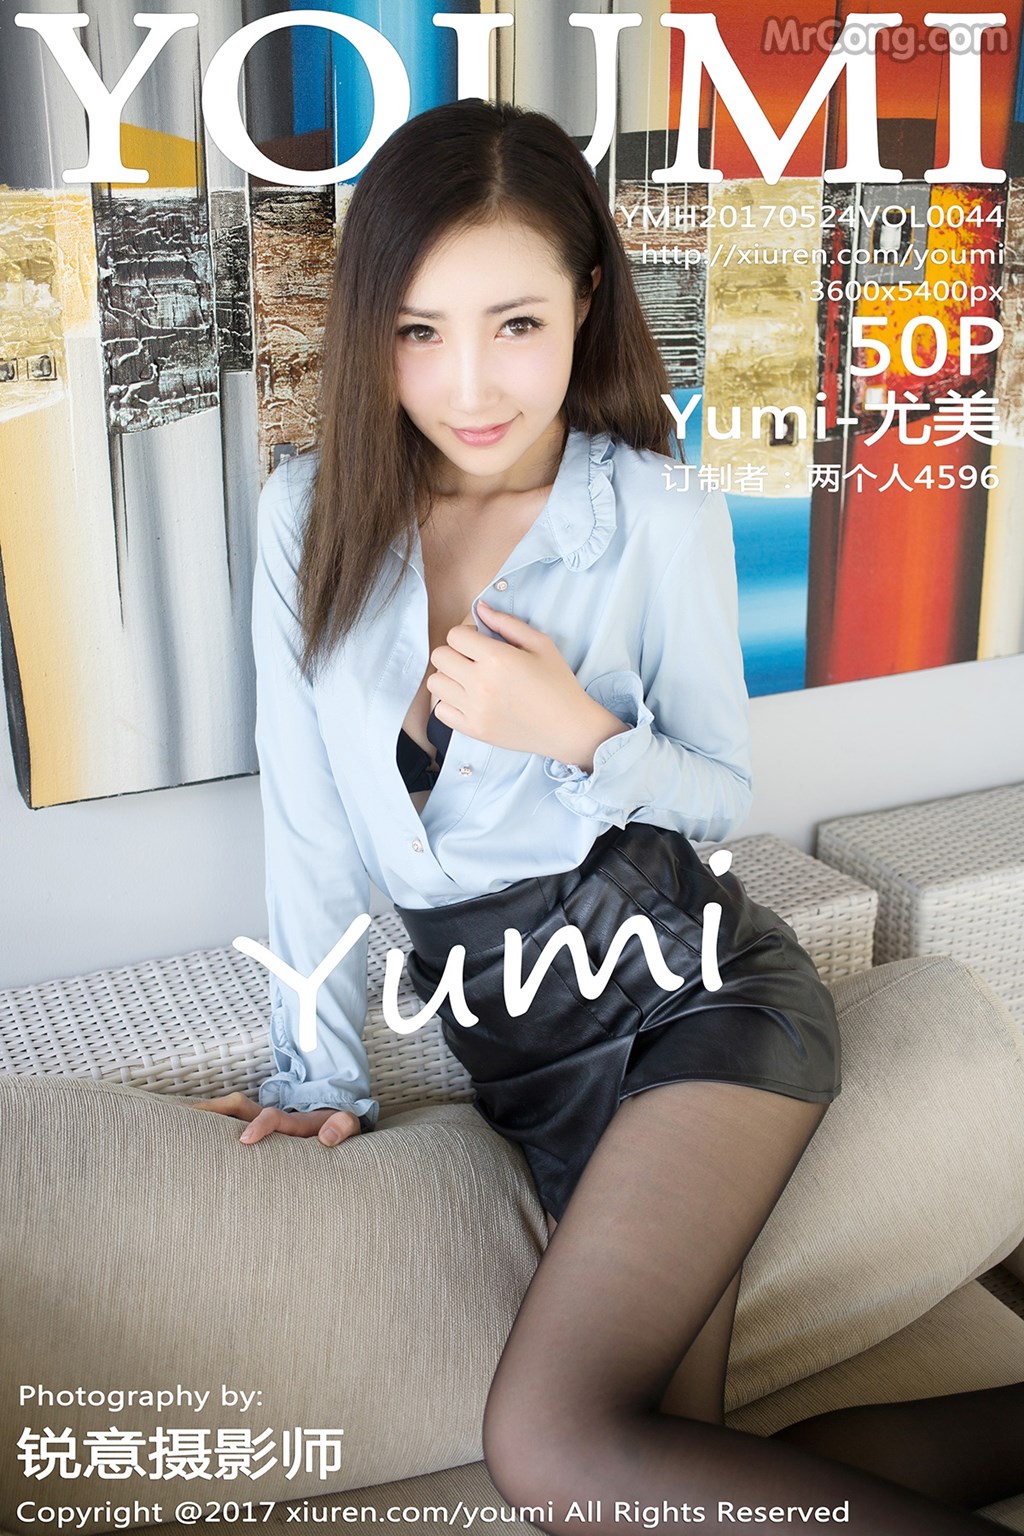 YouMi Vol.044: Model Yumi (尤 美) (51 photos) photo 1-0